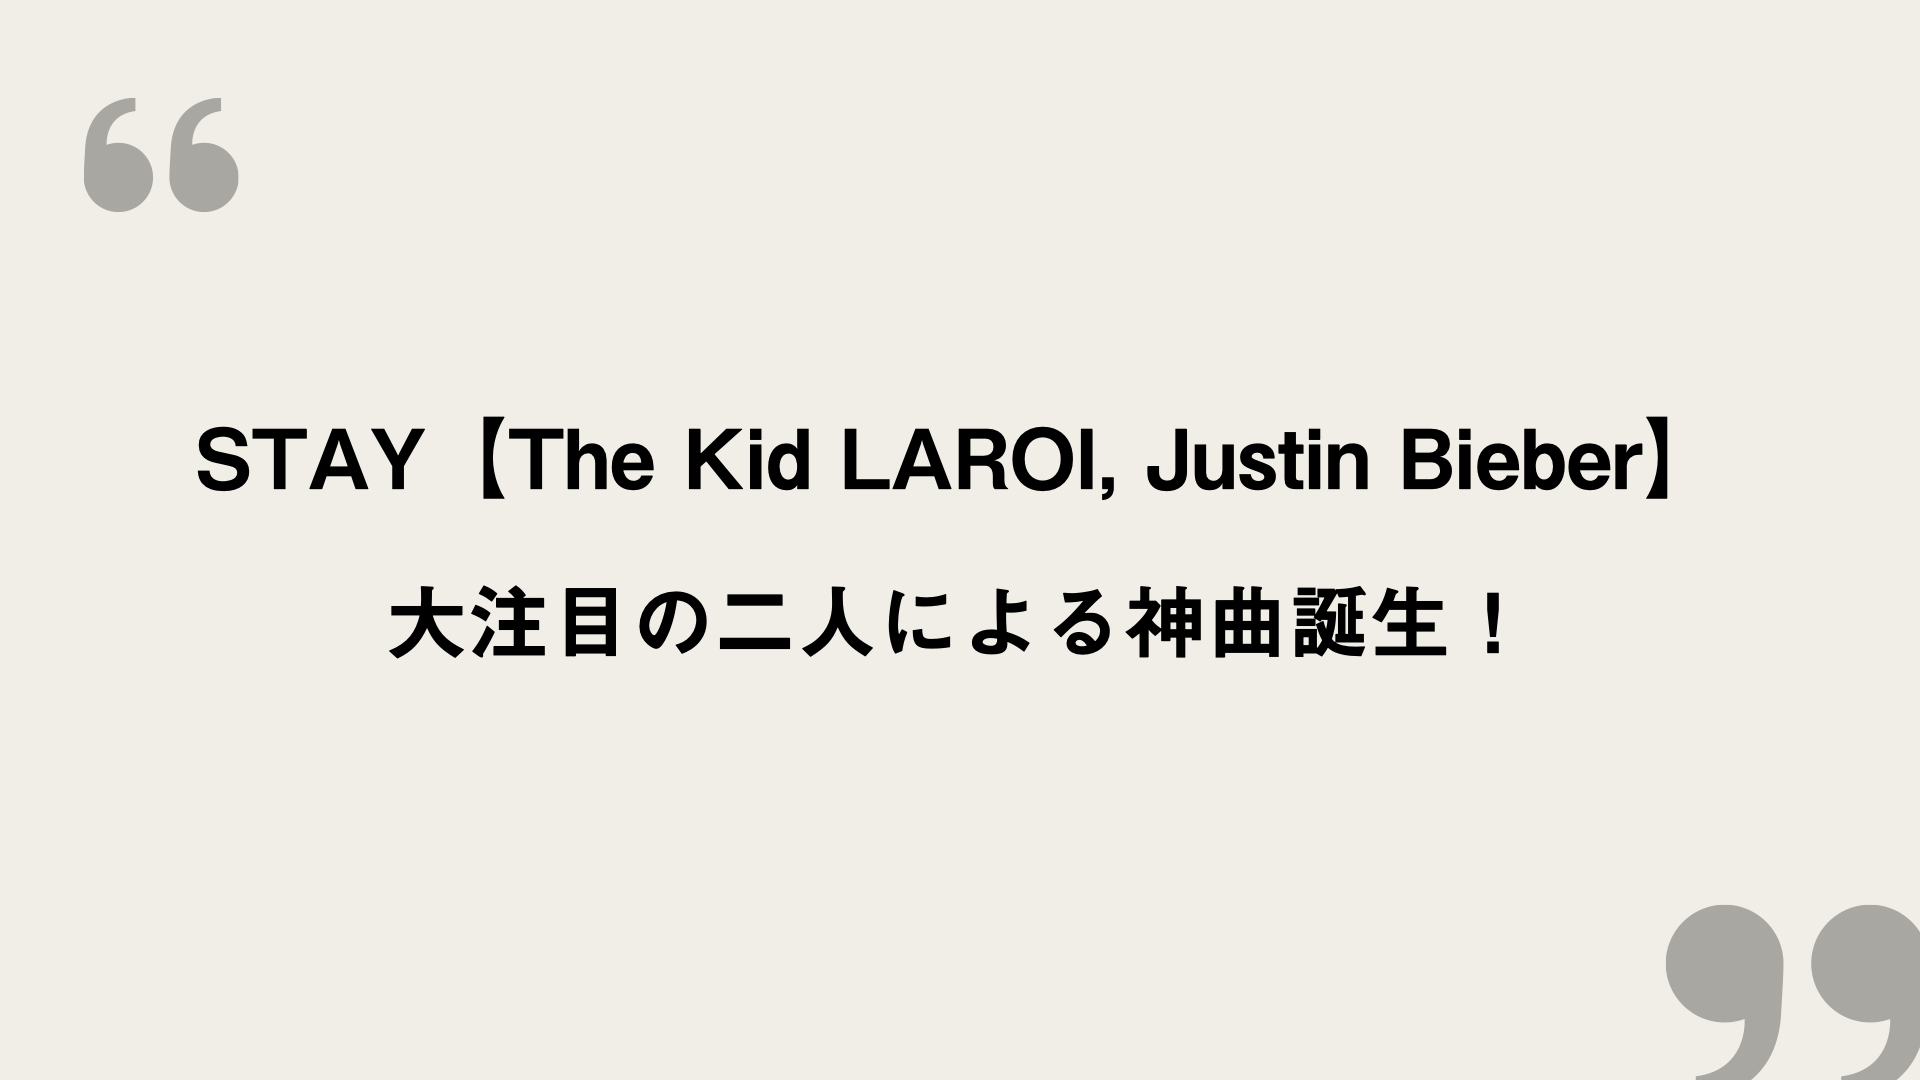 Stay The Kid Laroi Justin Bieber 歌詞の意味を和訳 考察 大注目の二人による神曲誕生 Framu Media